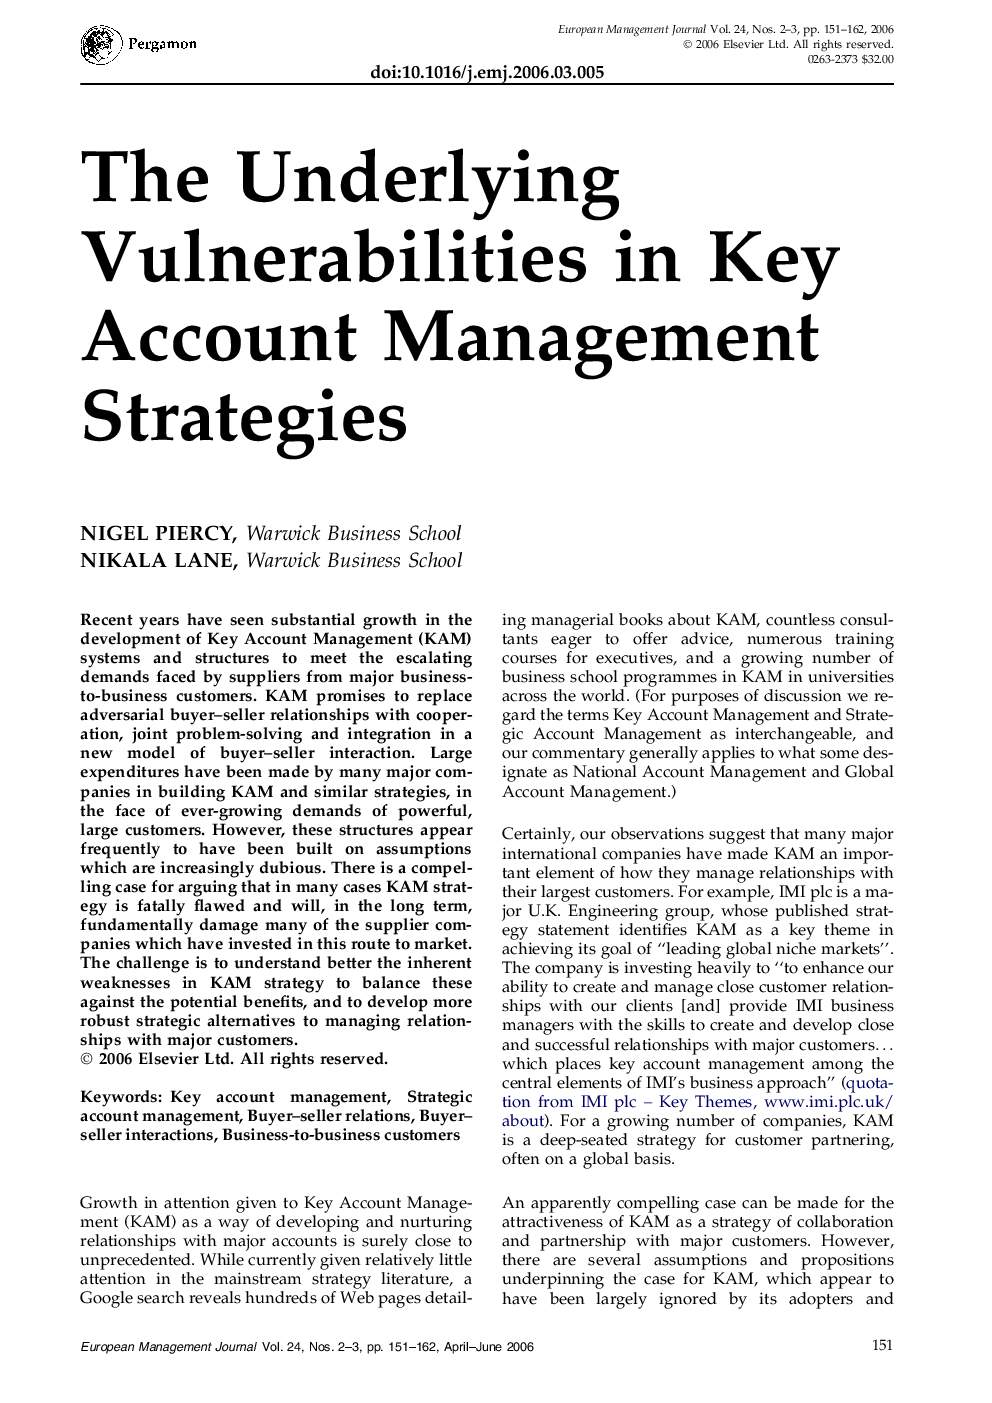 The Underlying Vulnerabilities in Key Account Management Strategies